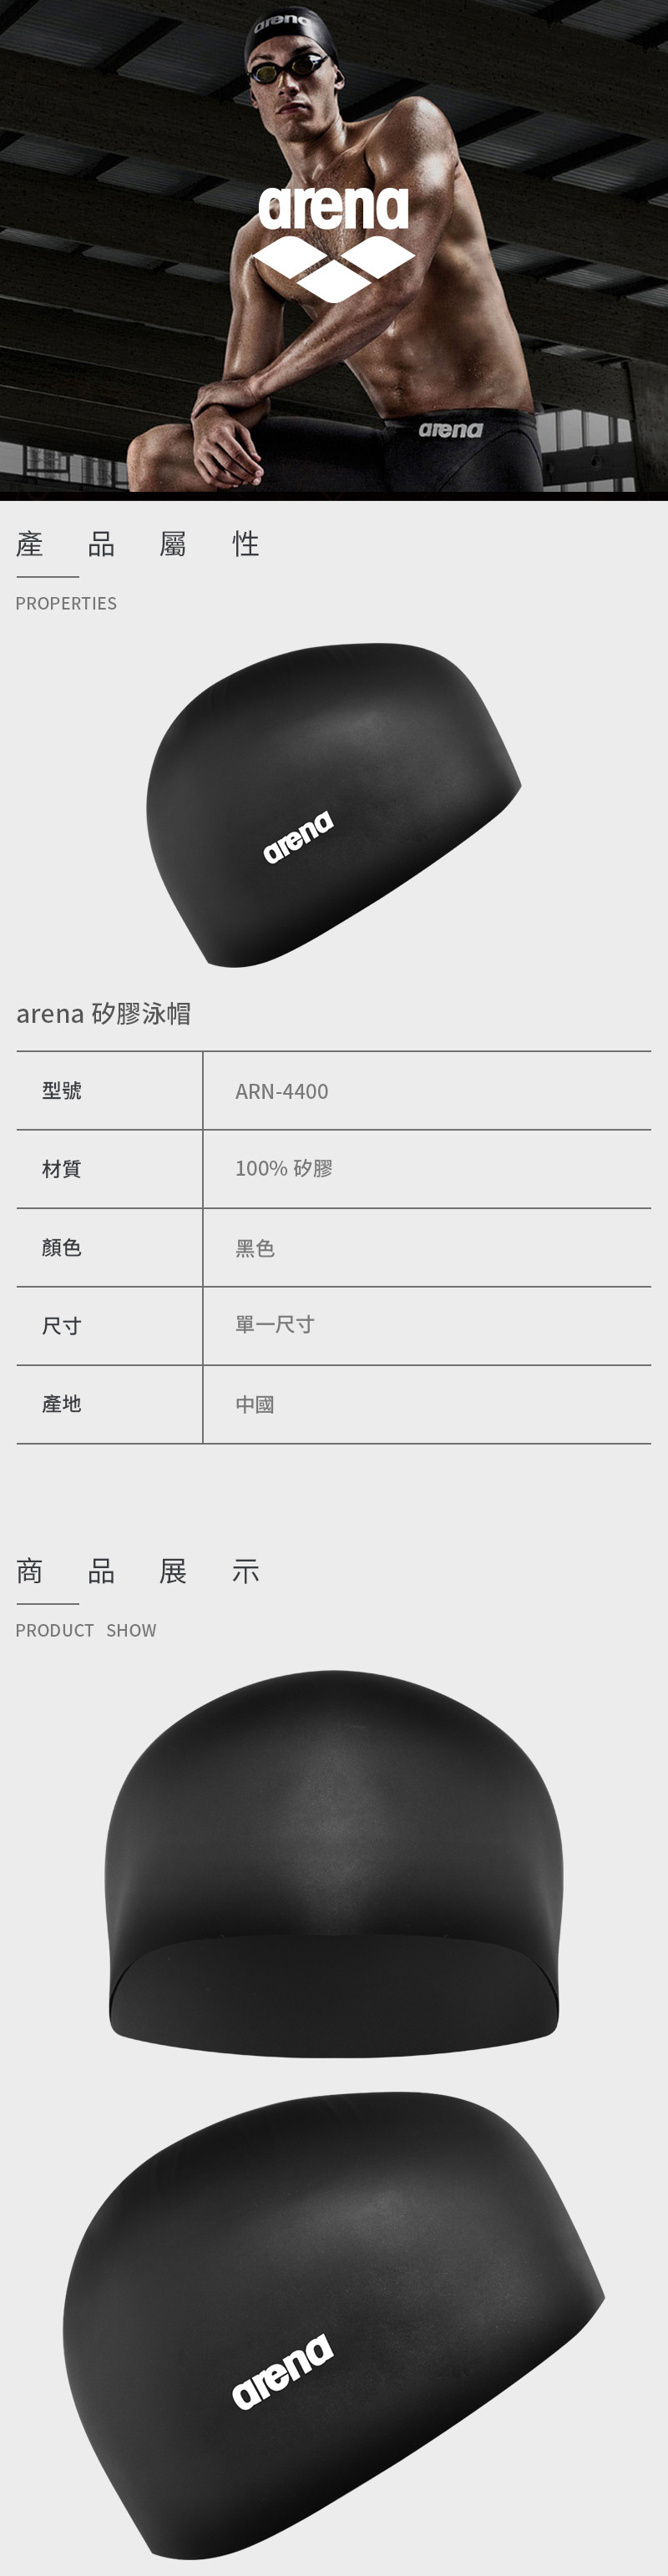 【arena】矽膠泳帽 ARN-4400